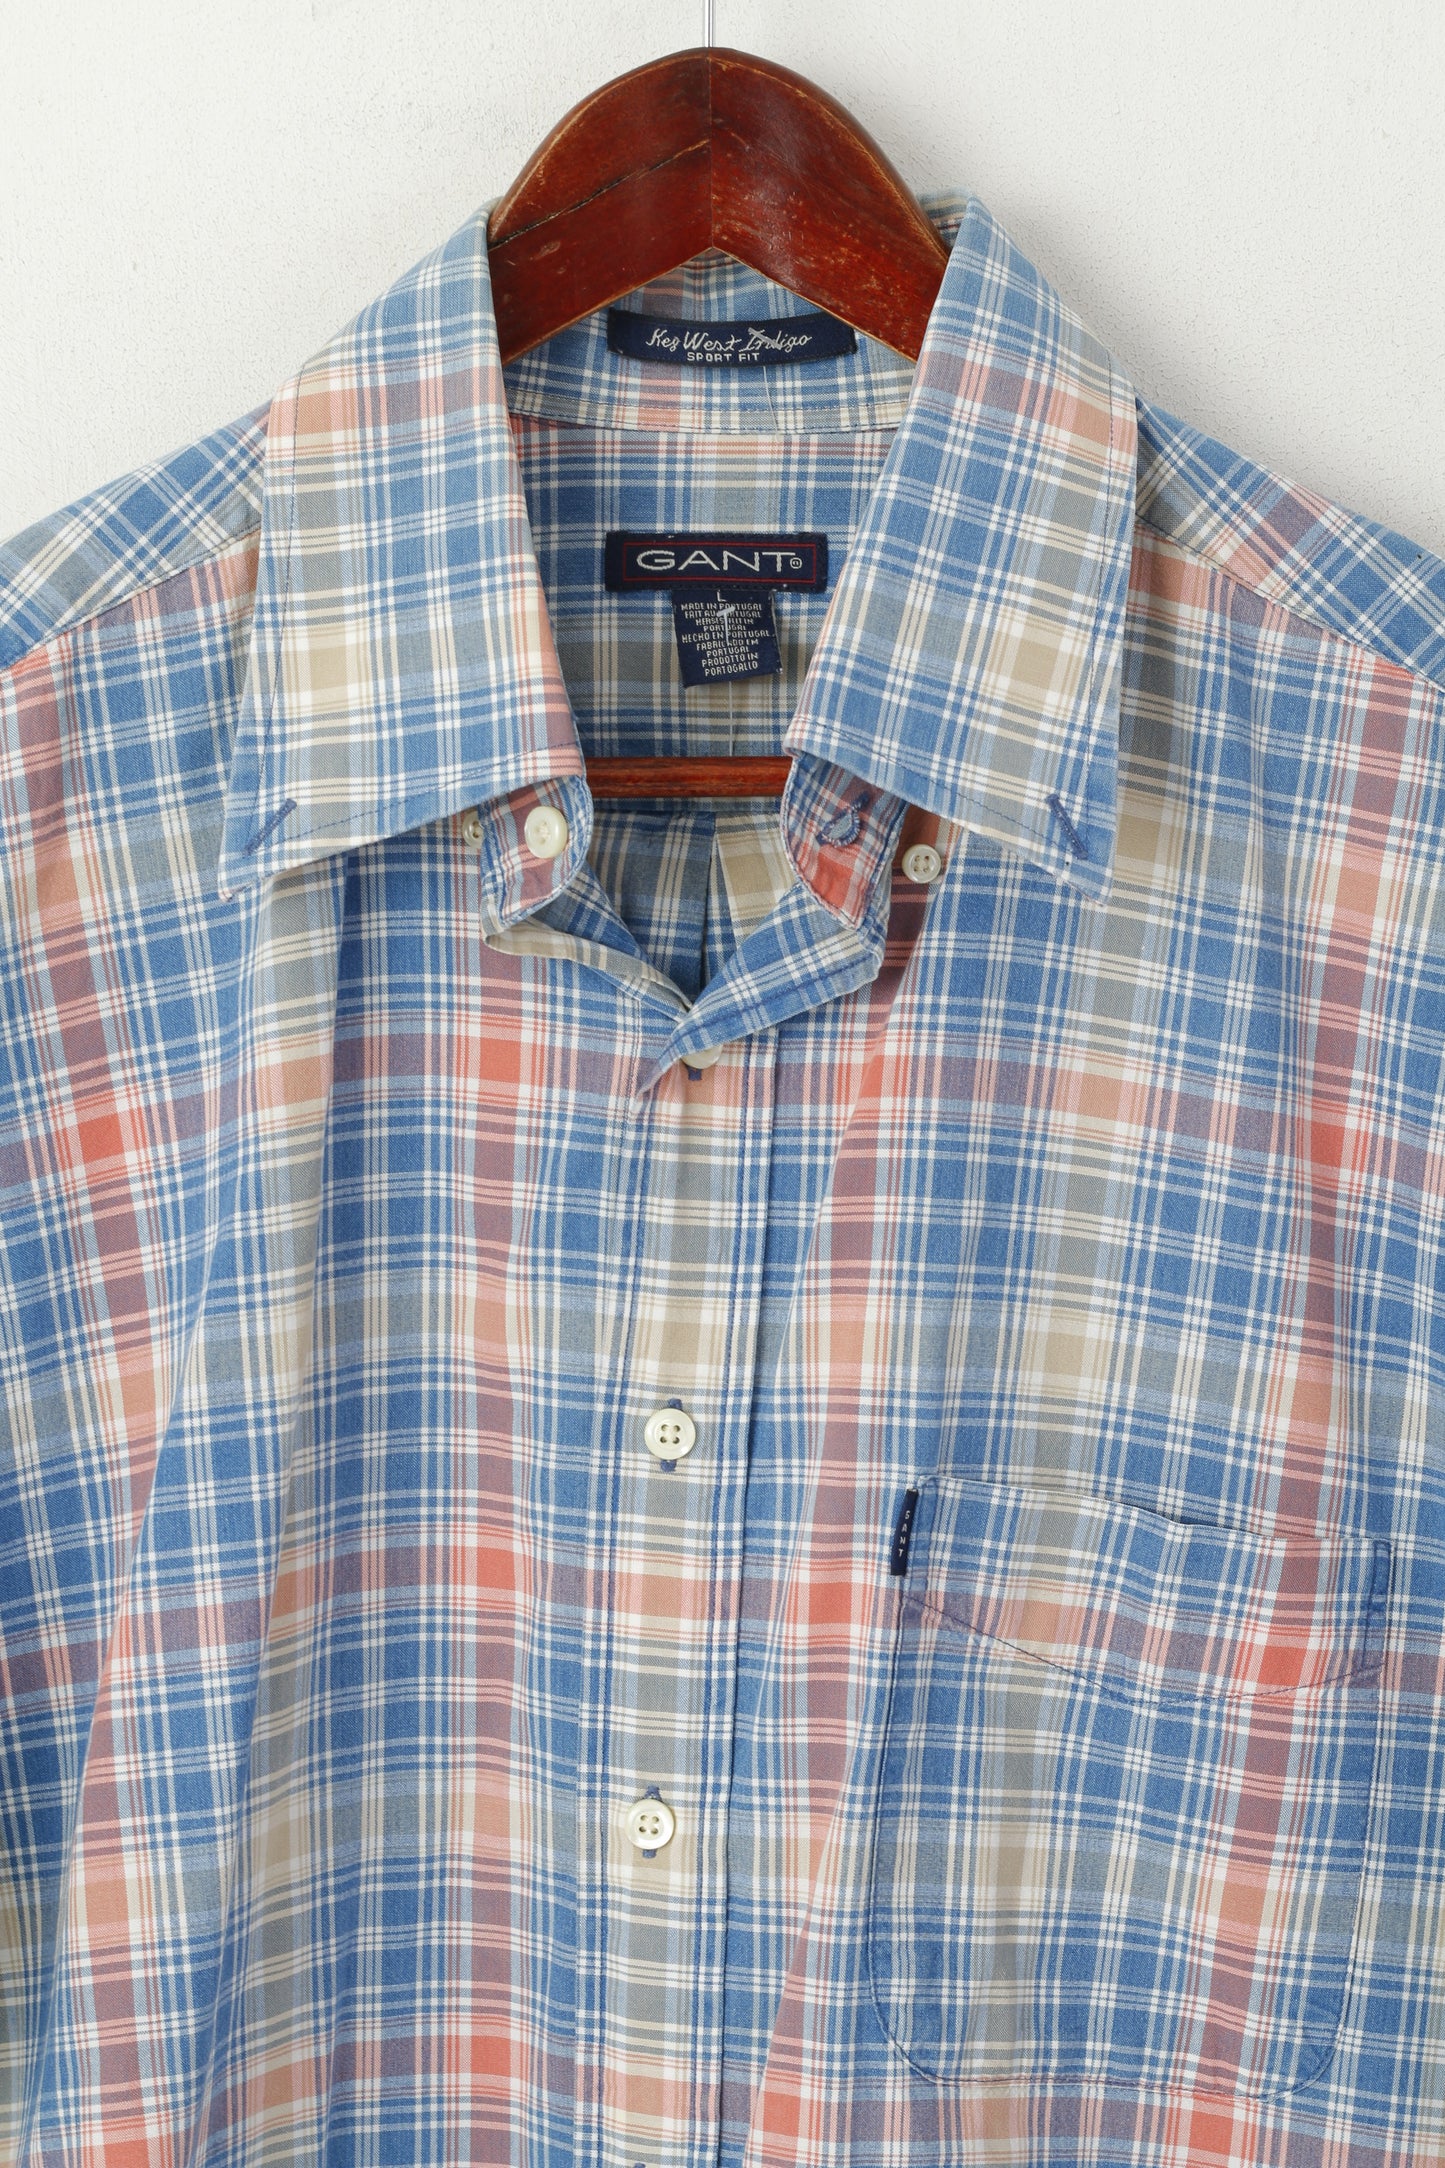 Gant Men L Casual Shirt Blue Check Key West Indigo Sport Fit Short Sleeve Top